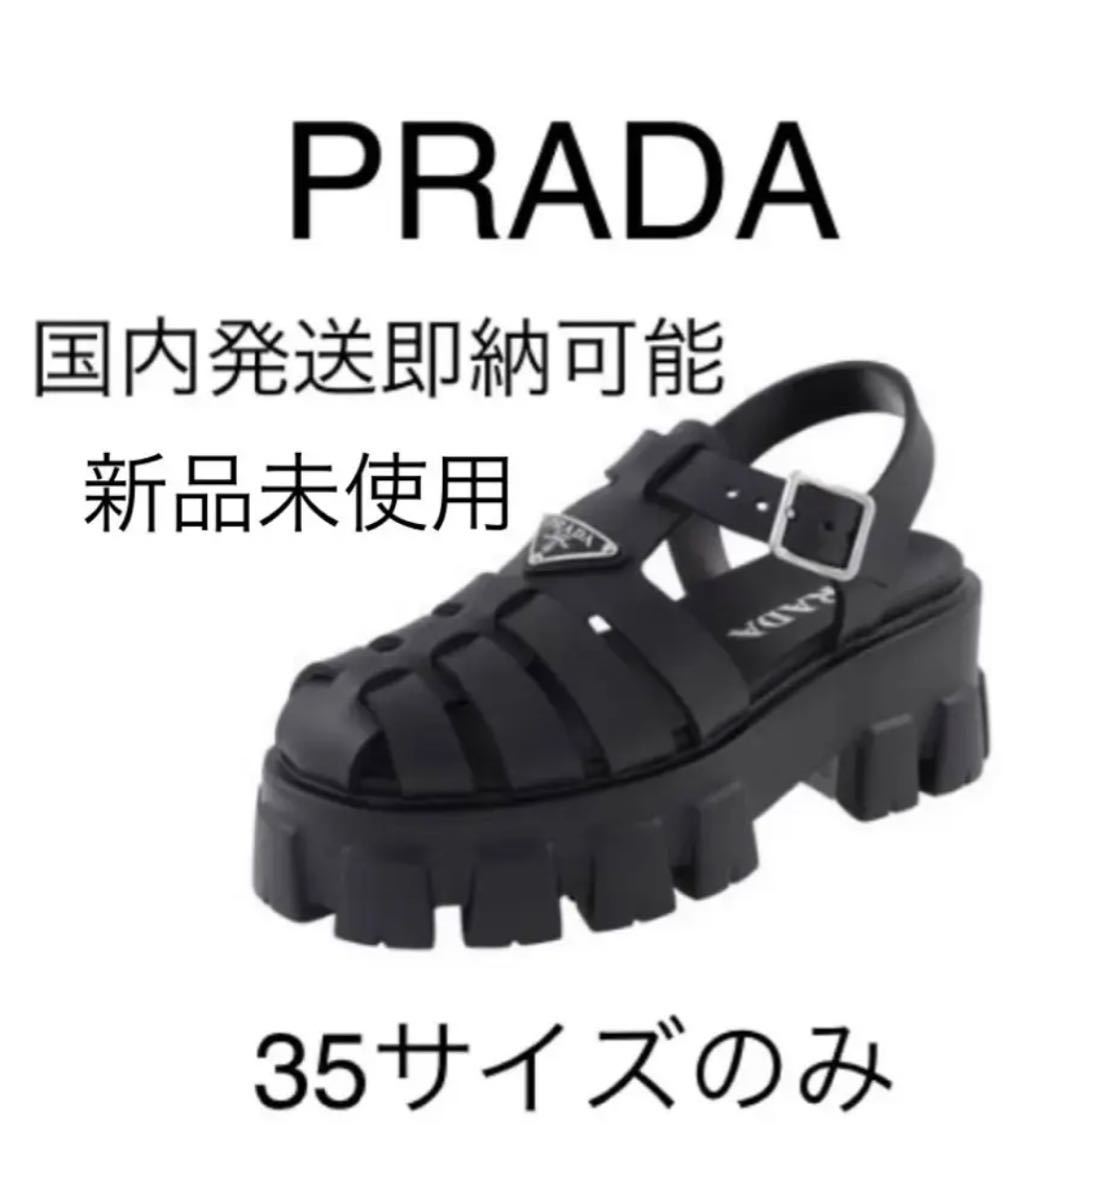 PRADA (プラダ) スエードサンダル EU35 (22cm) ブラック Yahoo!フリマ